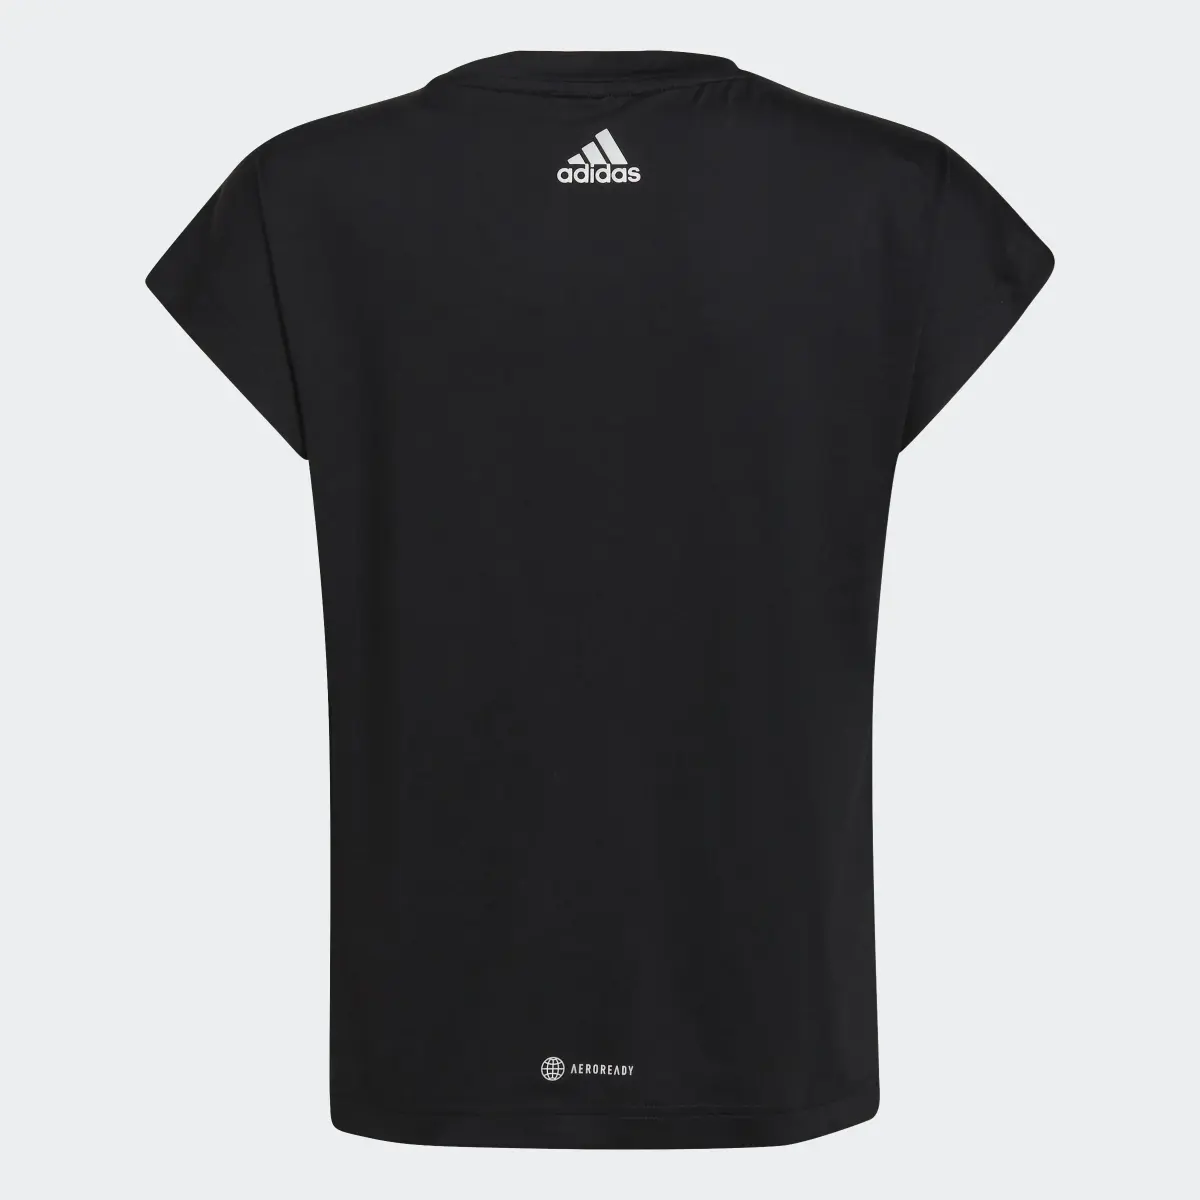 Adidas AEROREADY Training Graphic T-Shirt. 2